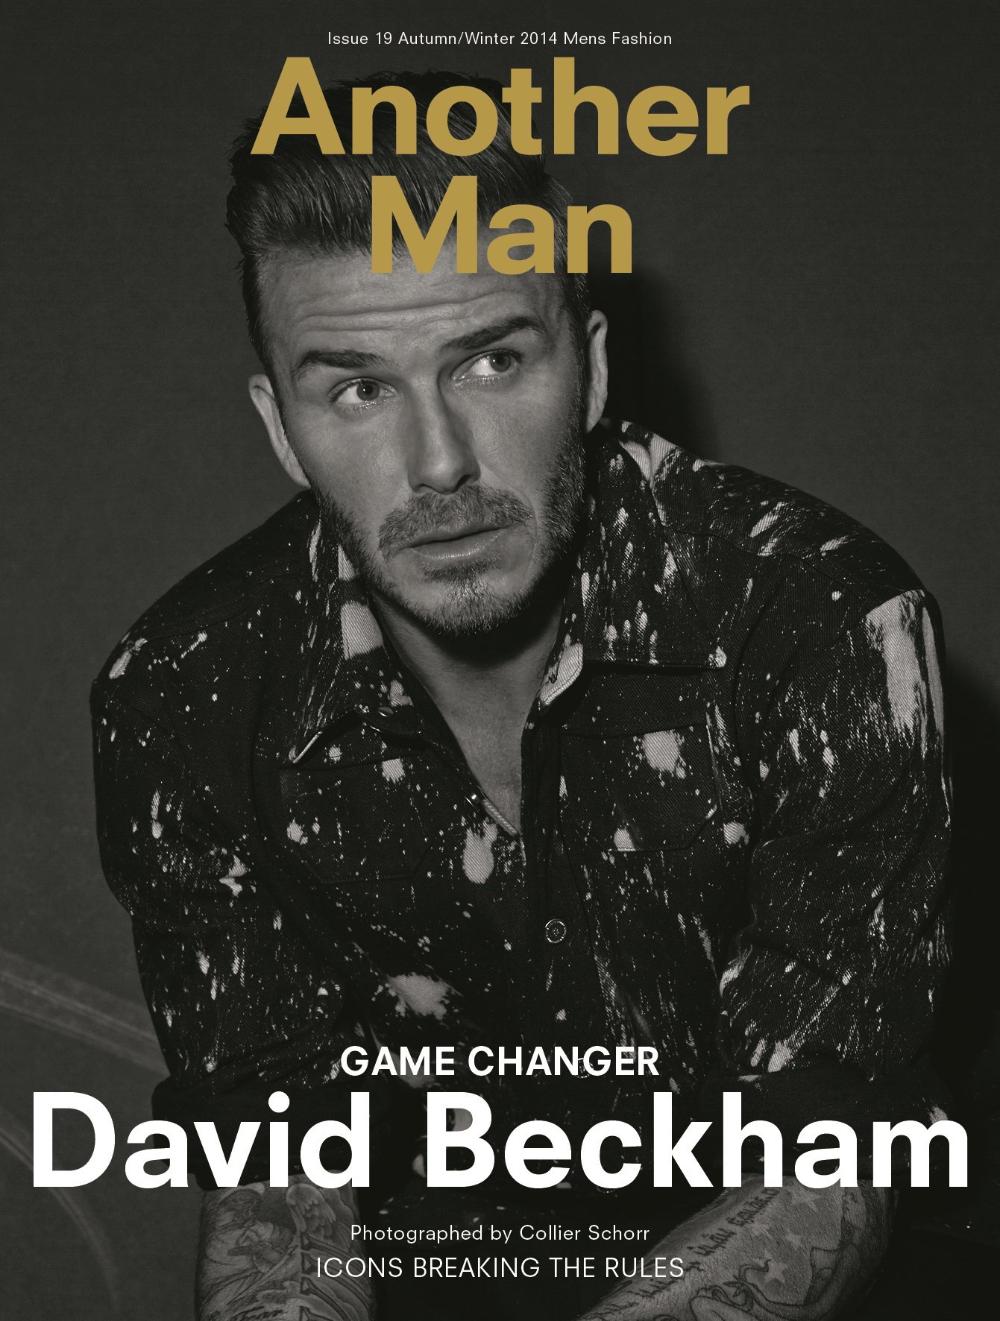 Game Changer David Beckham Covers Another Man Magazine Fall-Winter 2014